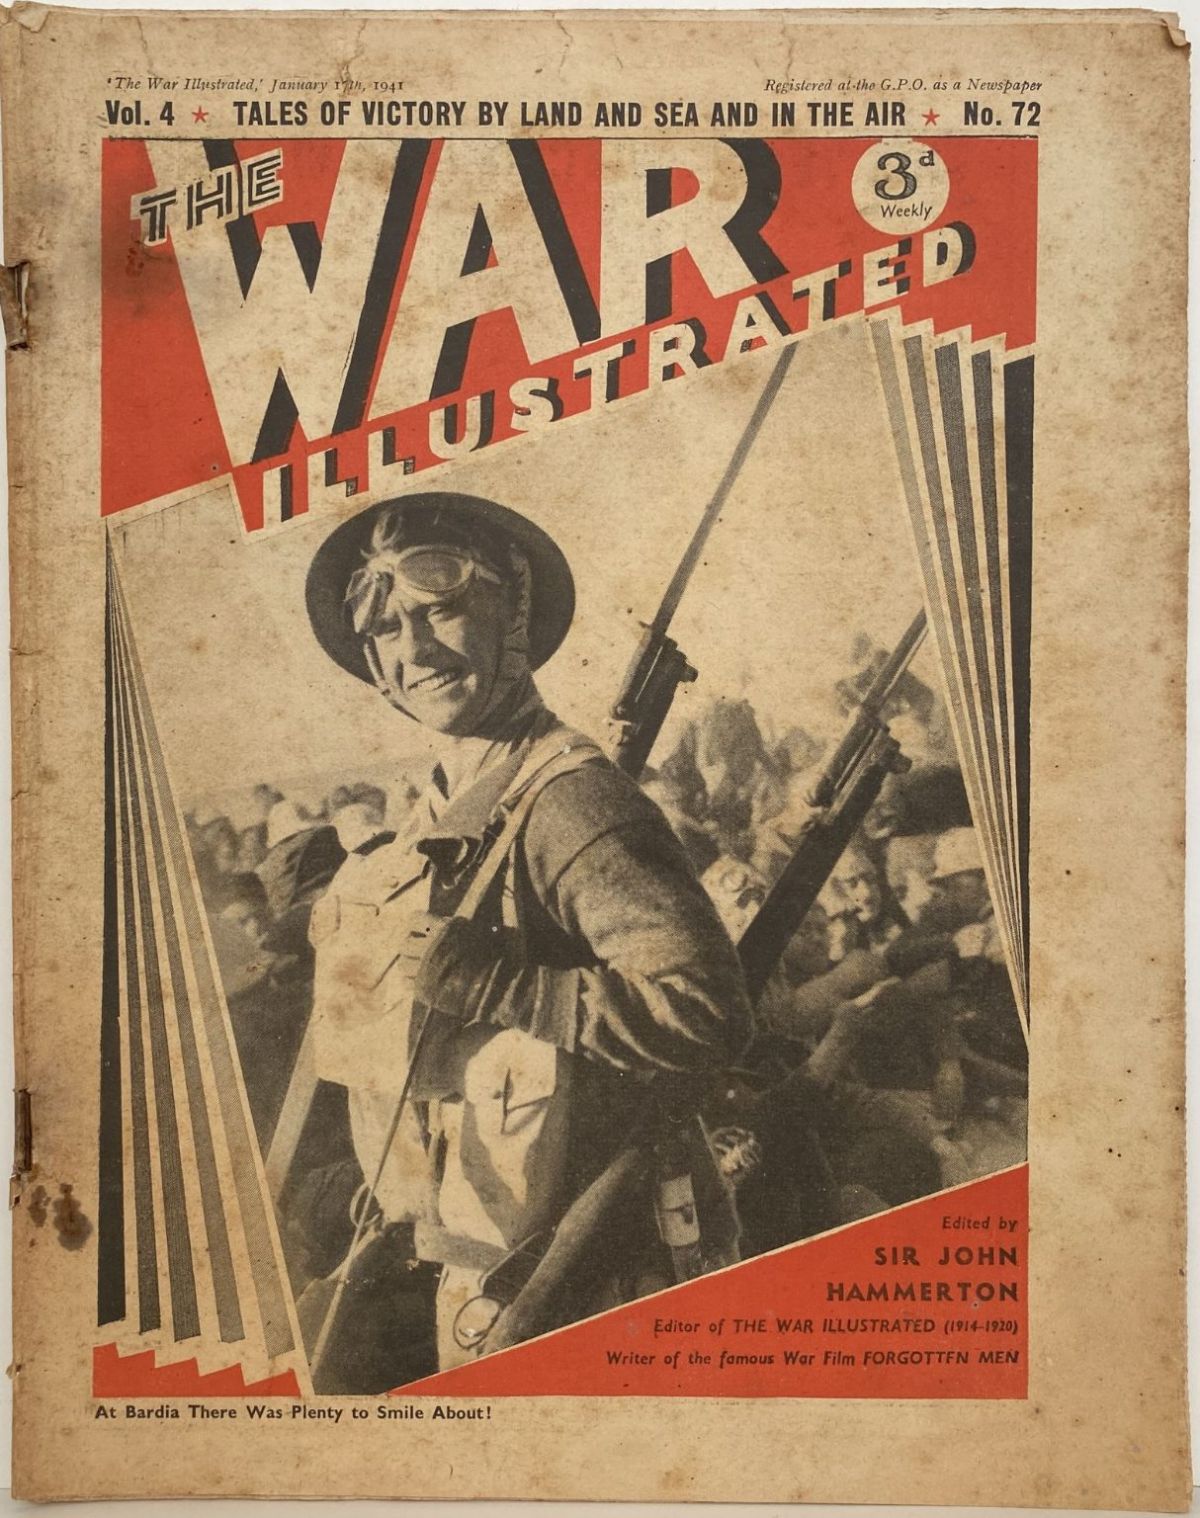 THE WAR ILLUSTRATED - Vol 4, No 72, 17th Jan 1941